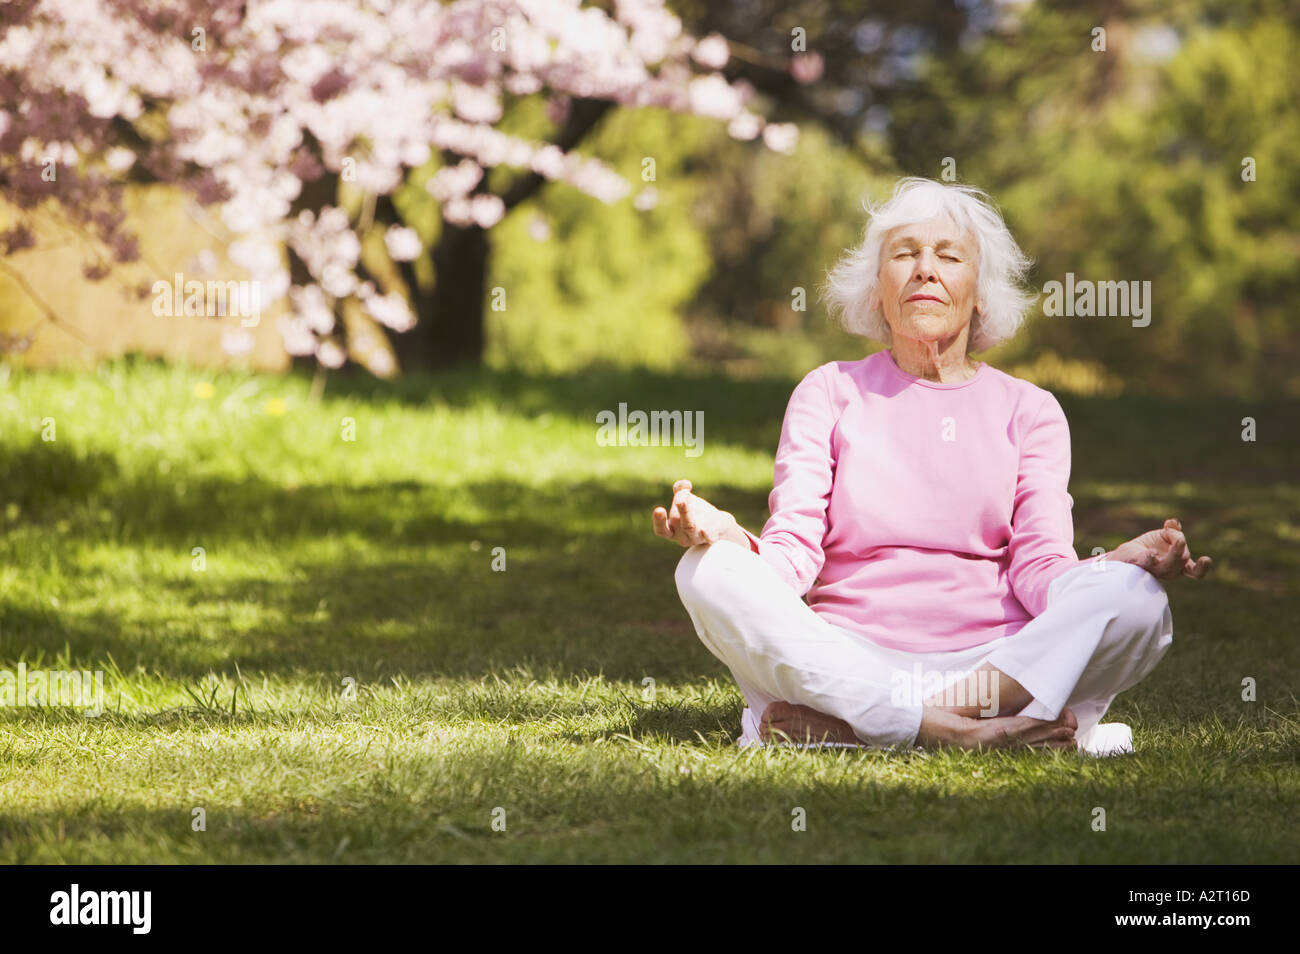 Senior woman in a yoga position Stock Photo